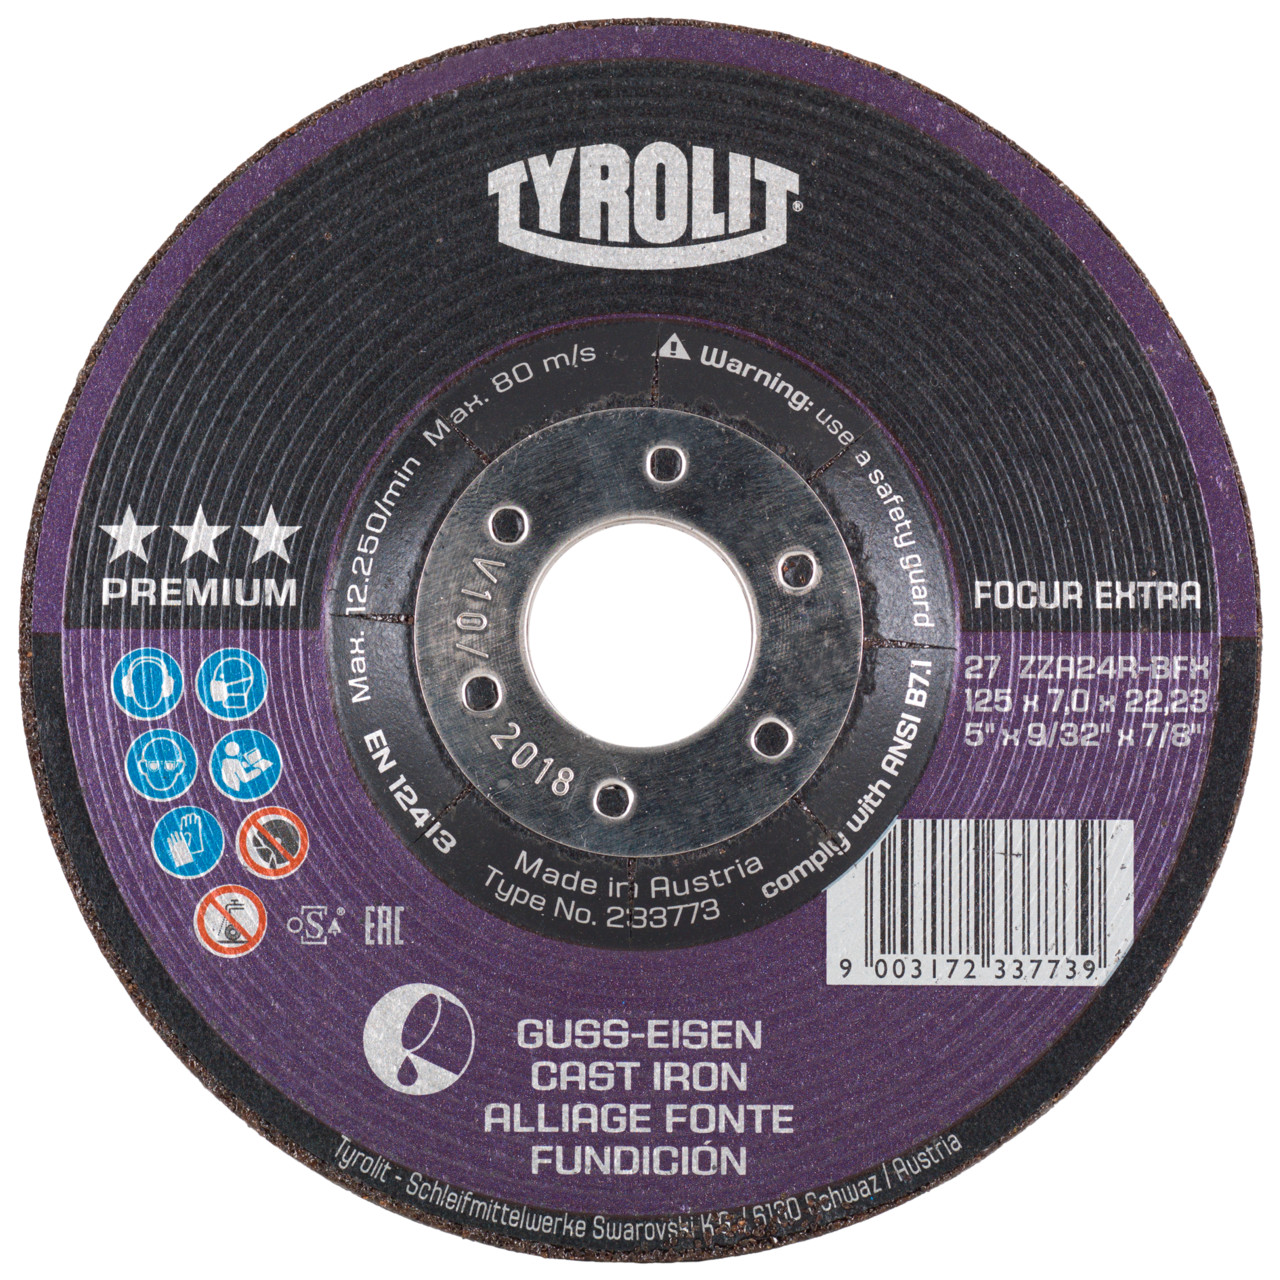 Tyrolit Roughing disc DxUxH 230x7x22.23 FOCUR Extra for cast iron, shape: 27 - offset version, Art. 929020